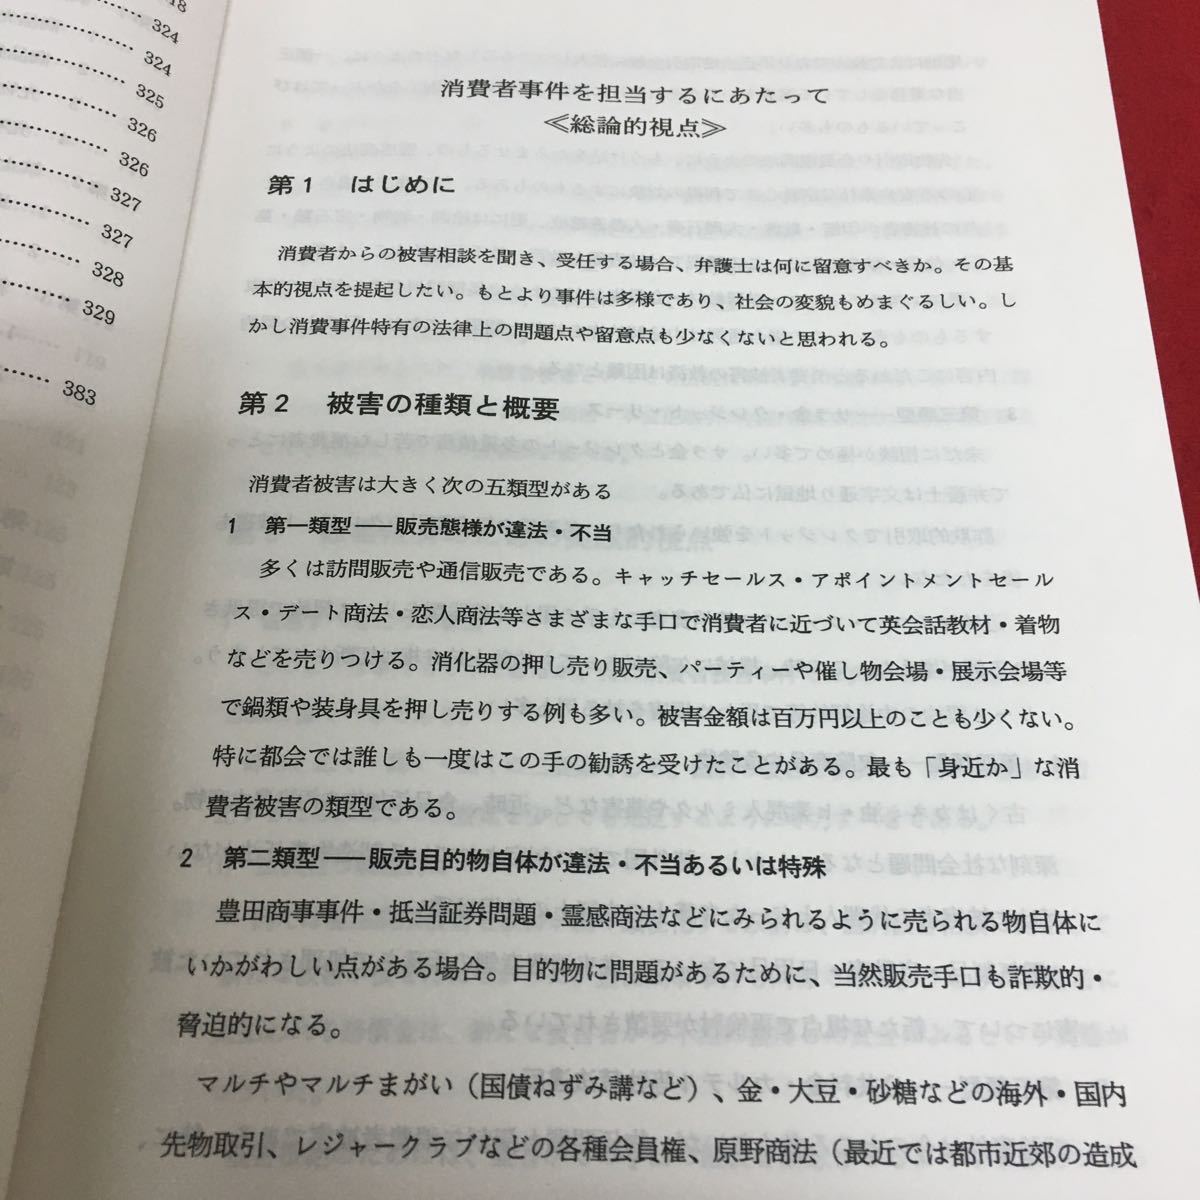 b-403 消費者被害法律相談ガイドブック 平成2年 第二東京弁護士会 法律相談センター 消費者問題対策委員会※4_画像3